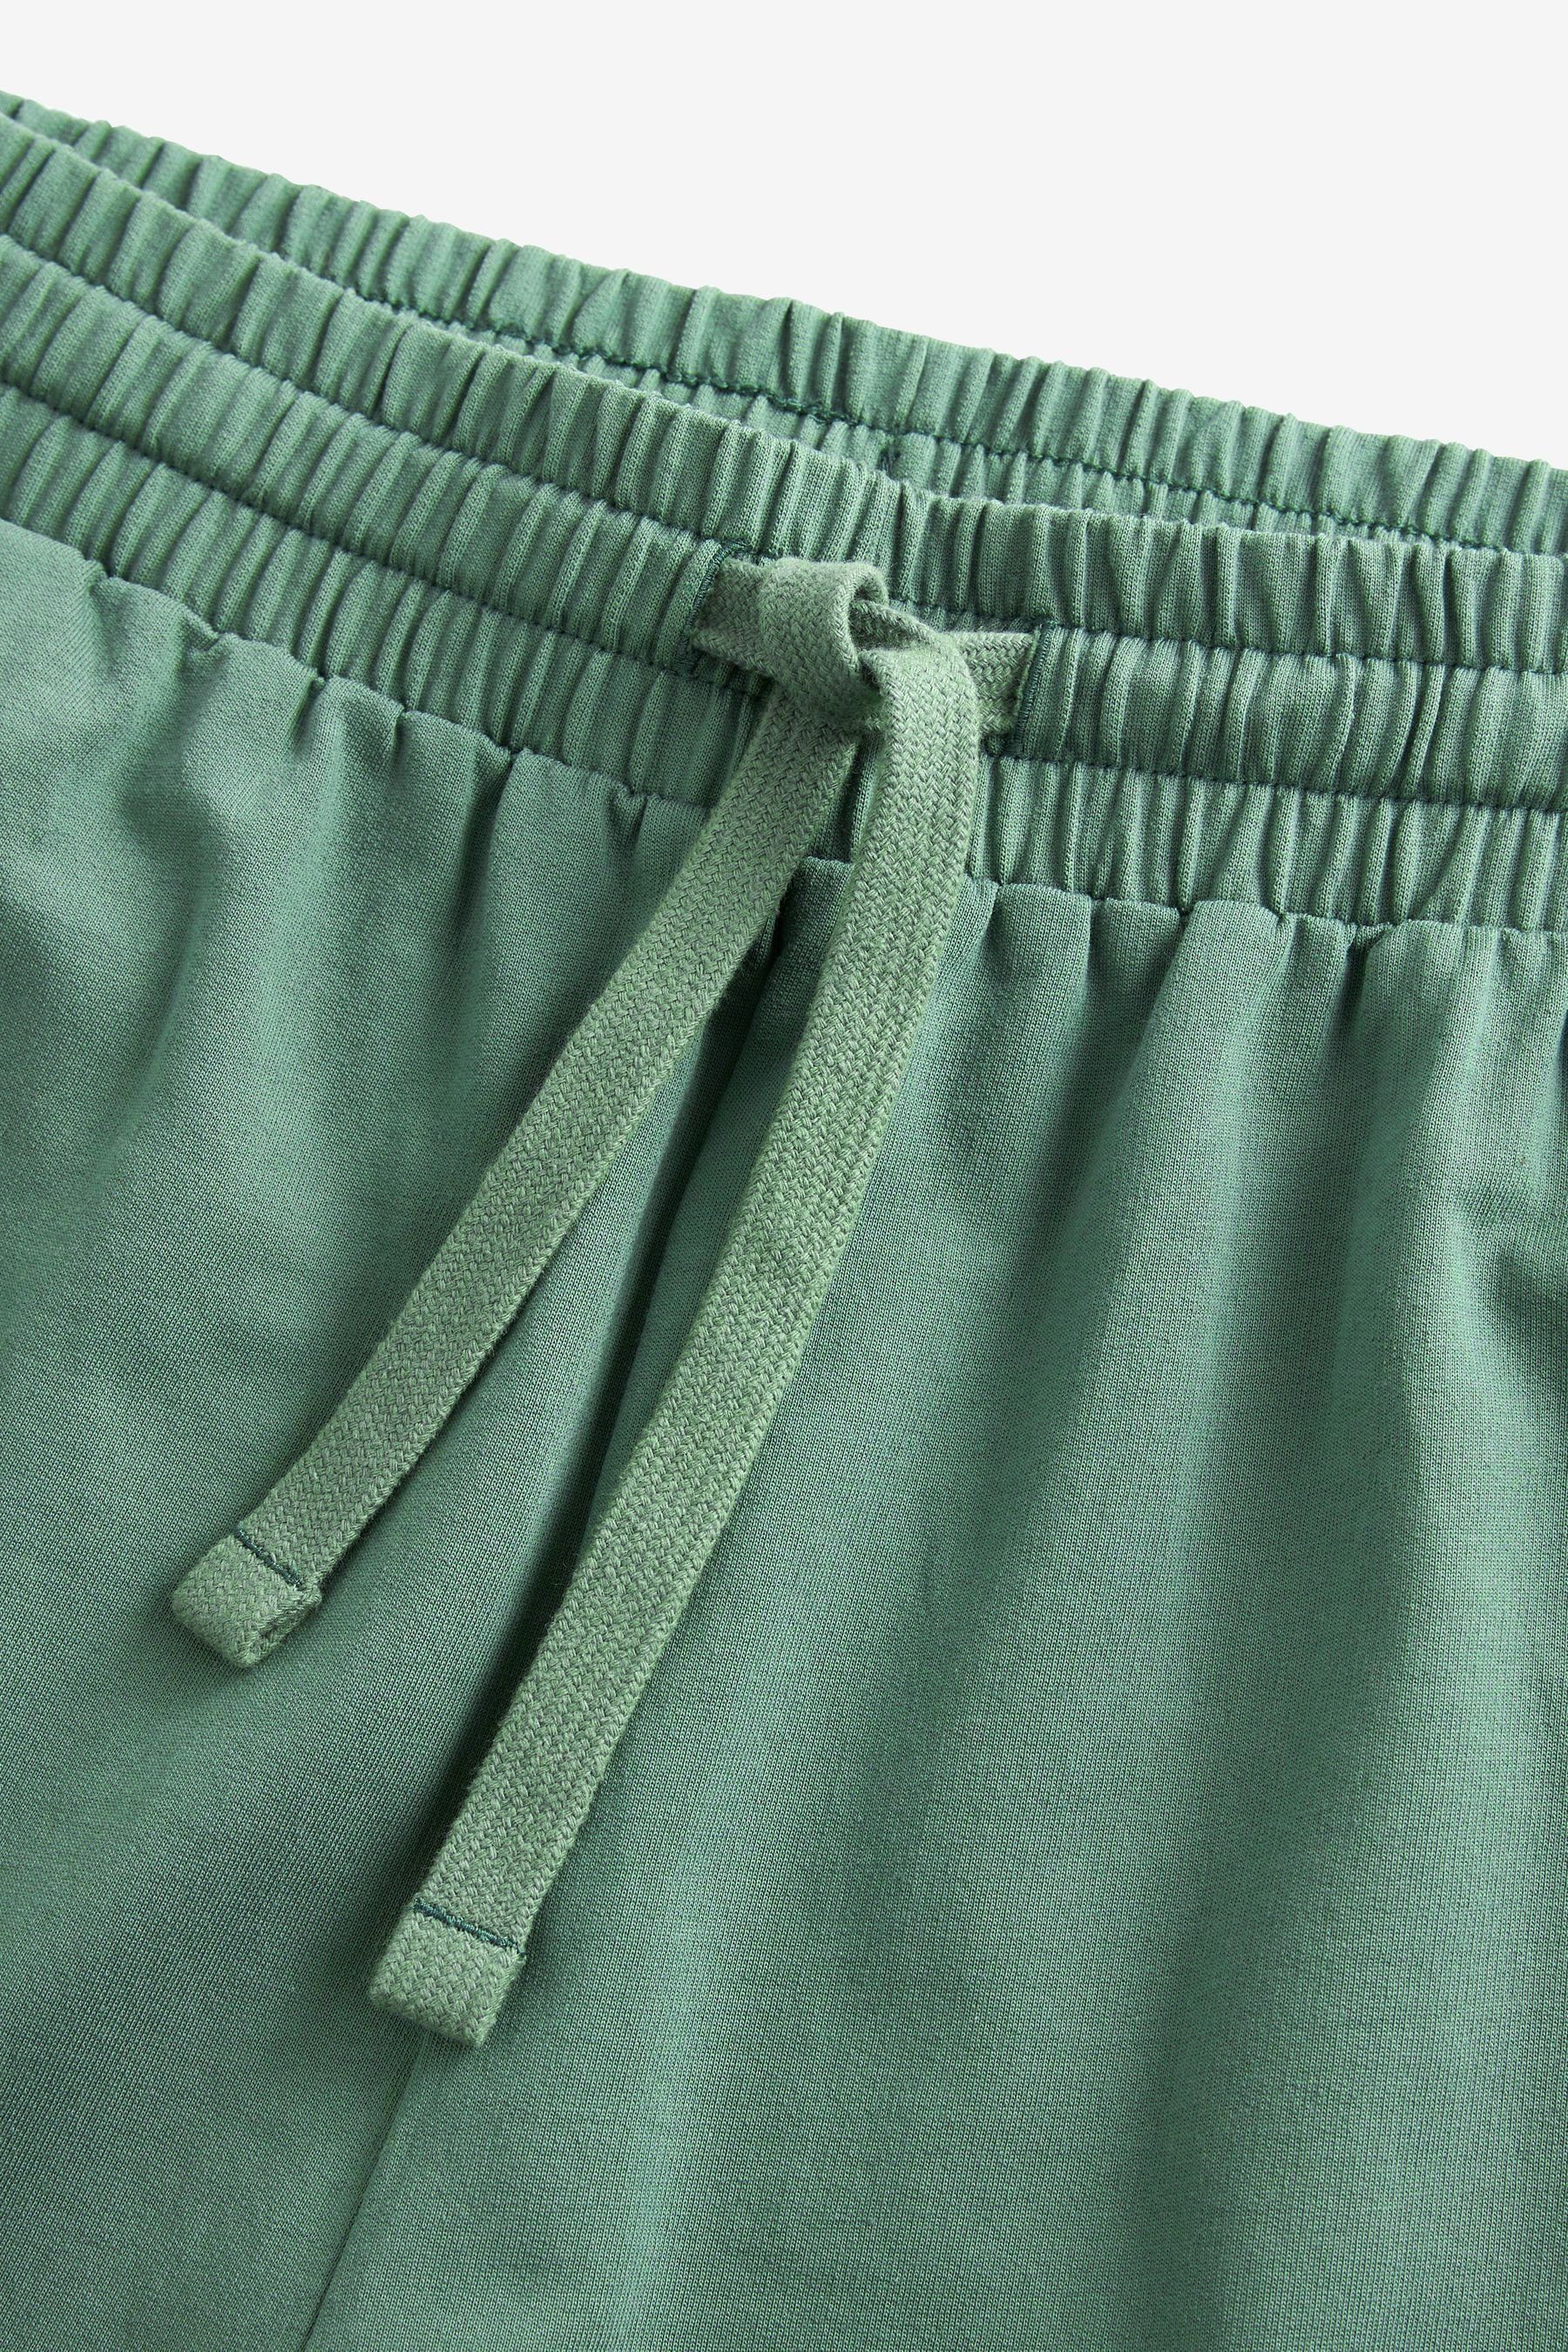 Next Schlafshorts Leichte (3-tlg) 3er-Pack Shorts, Blue/Stone/Green